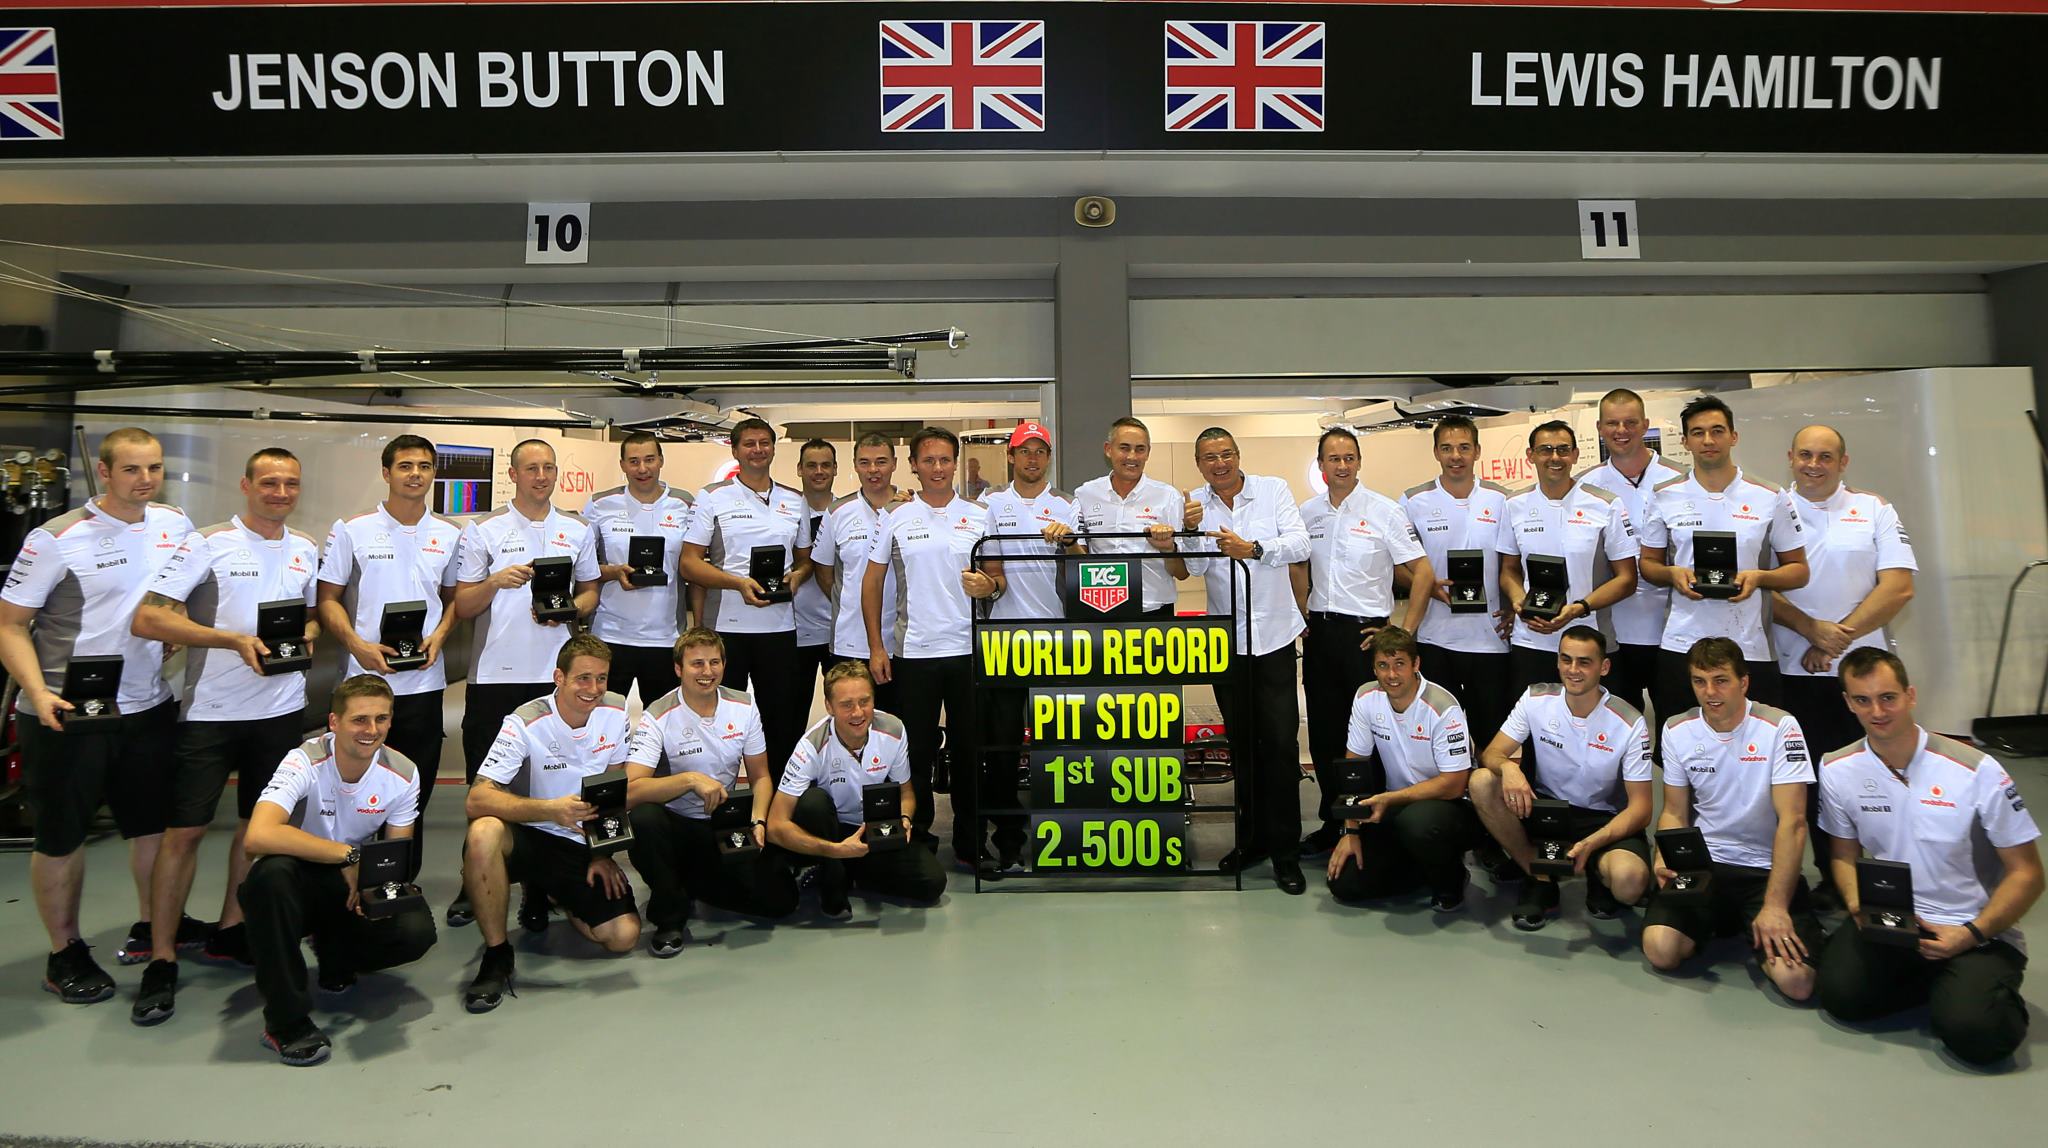 World Record McLaren Pit Crew each get a TAG Heuer watch ...